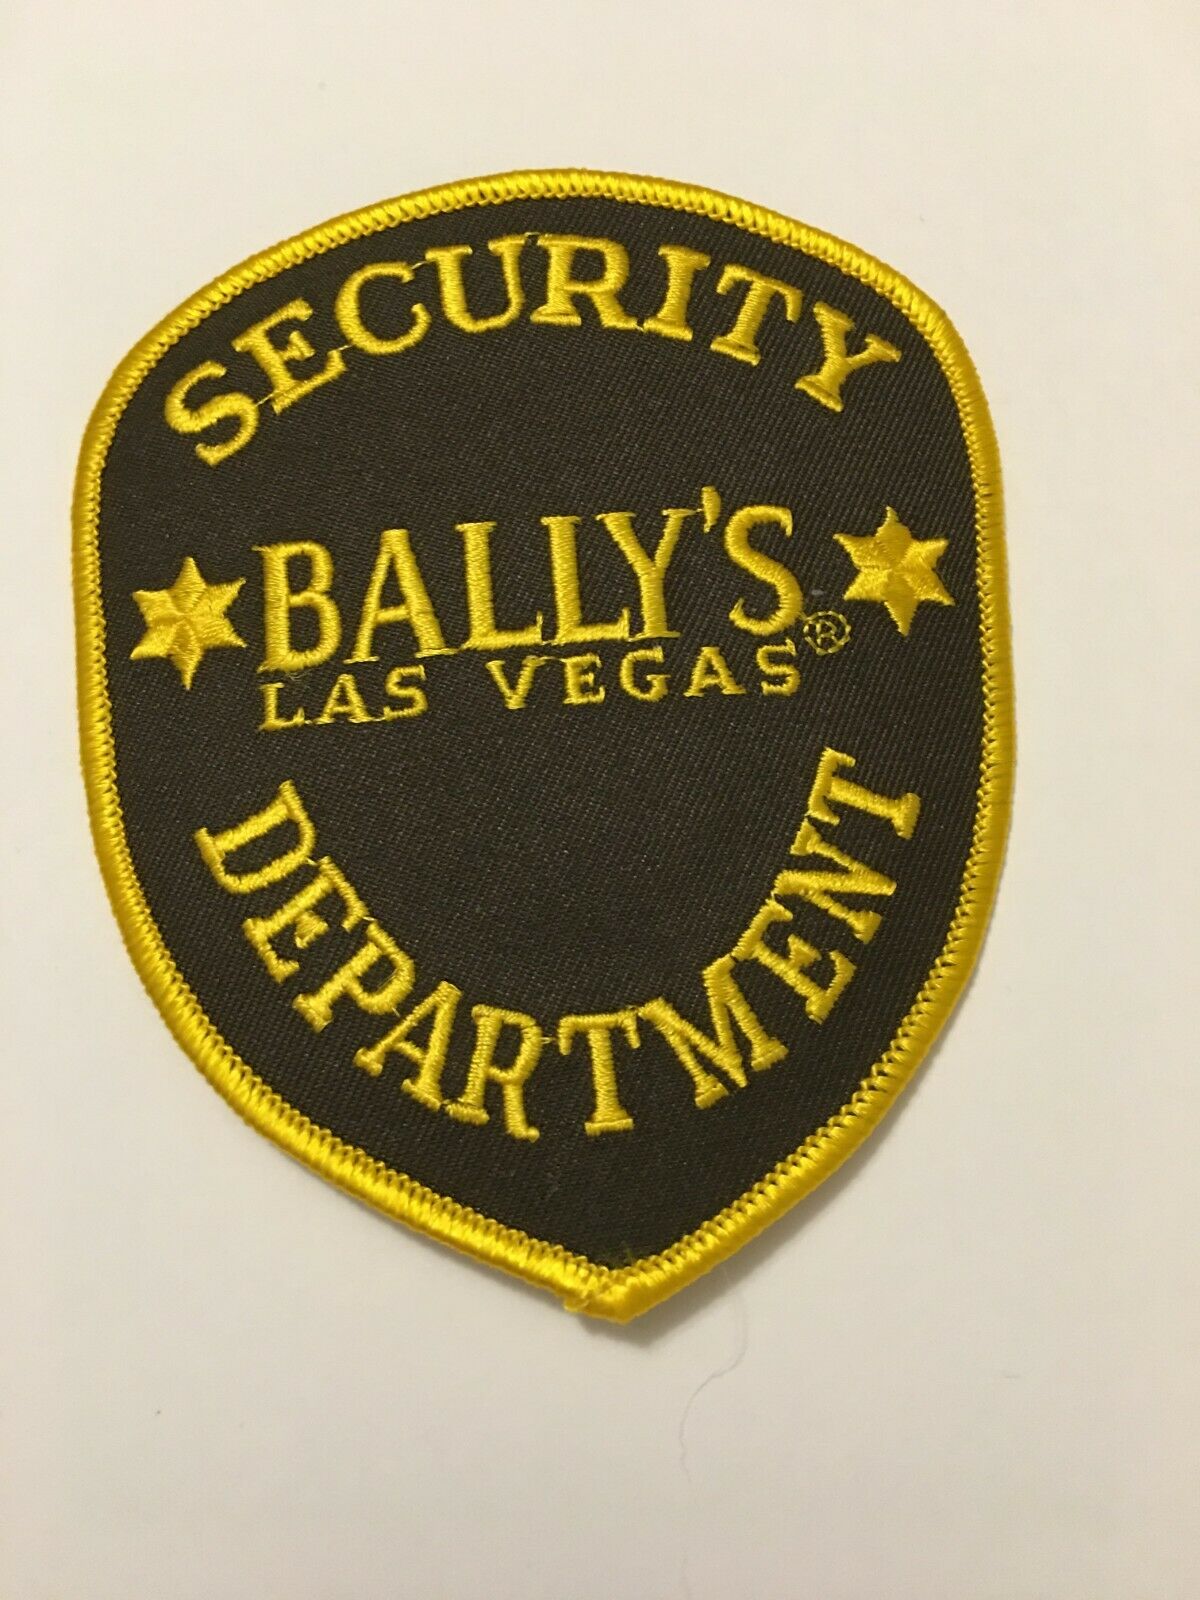 Bally’s Las Vegas Security Dept Patch Nevada Casino